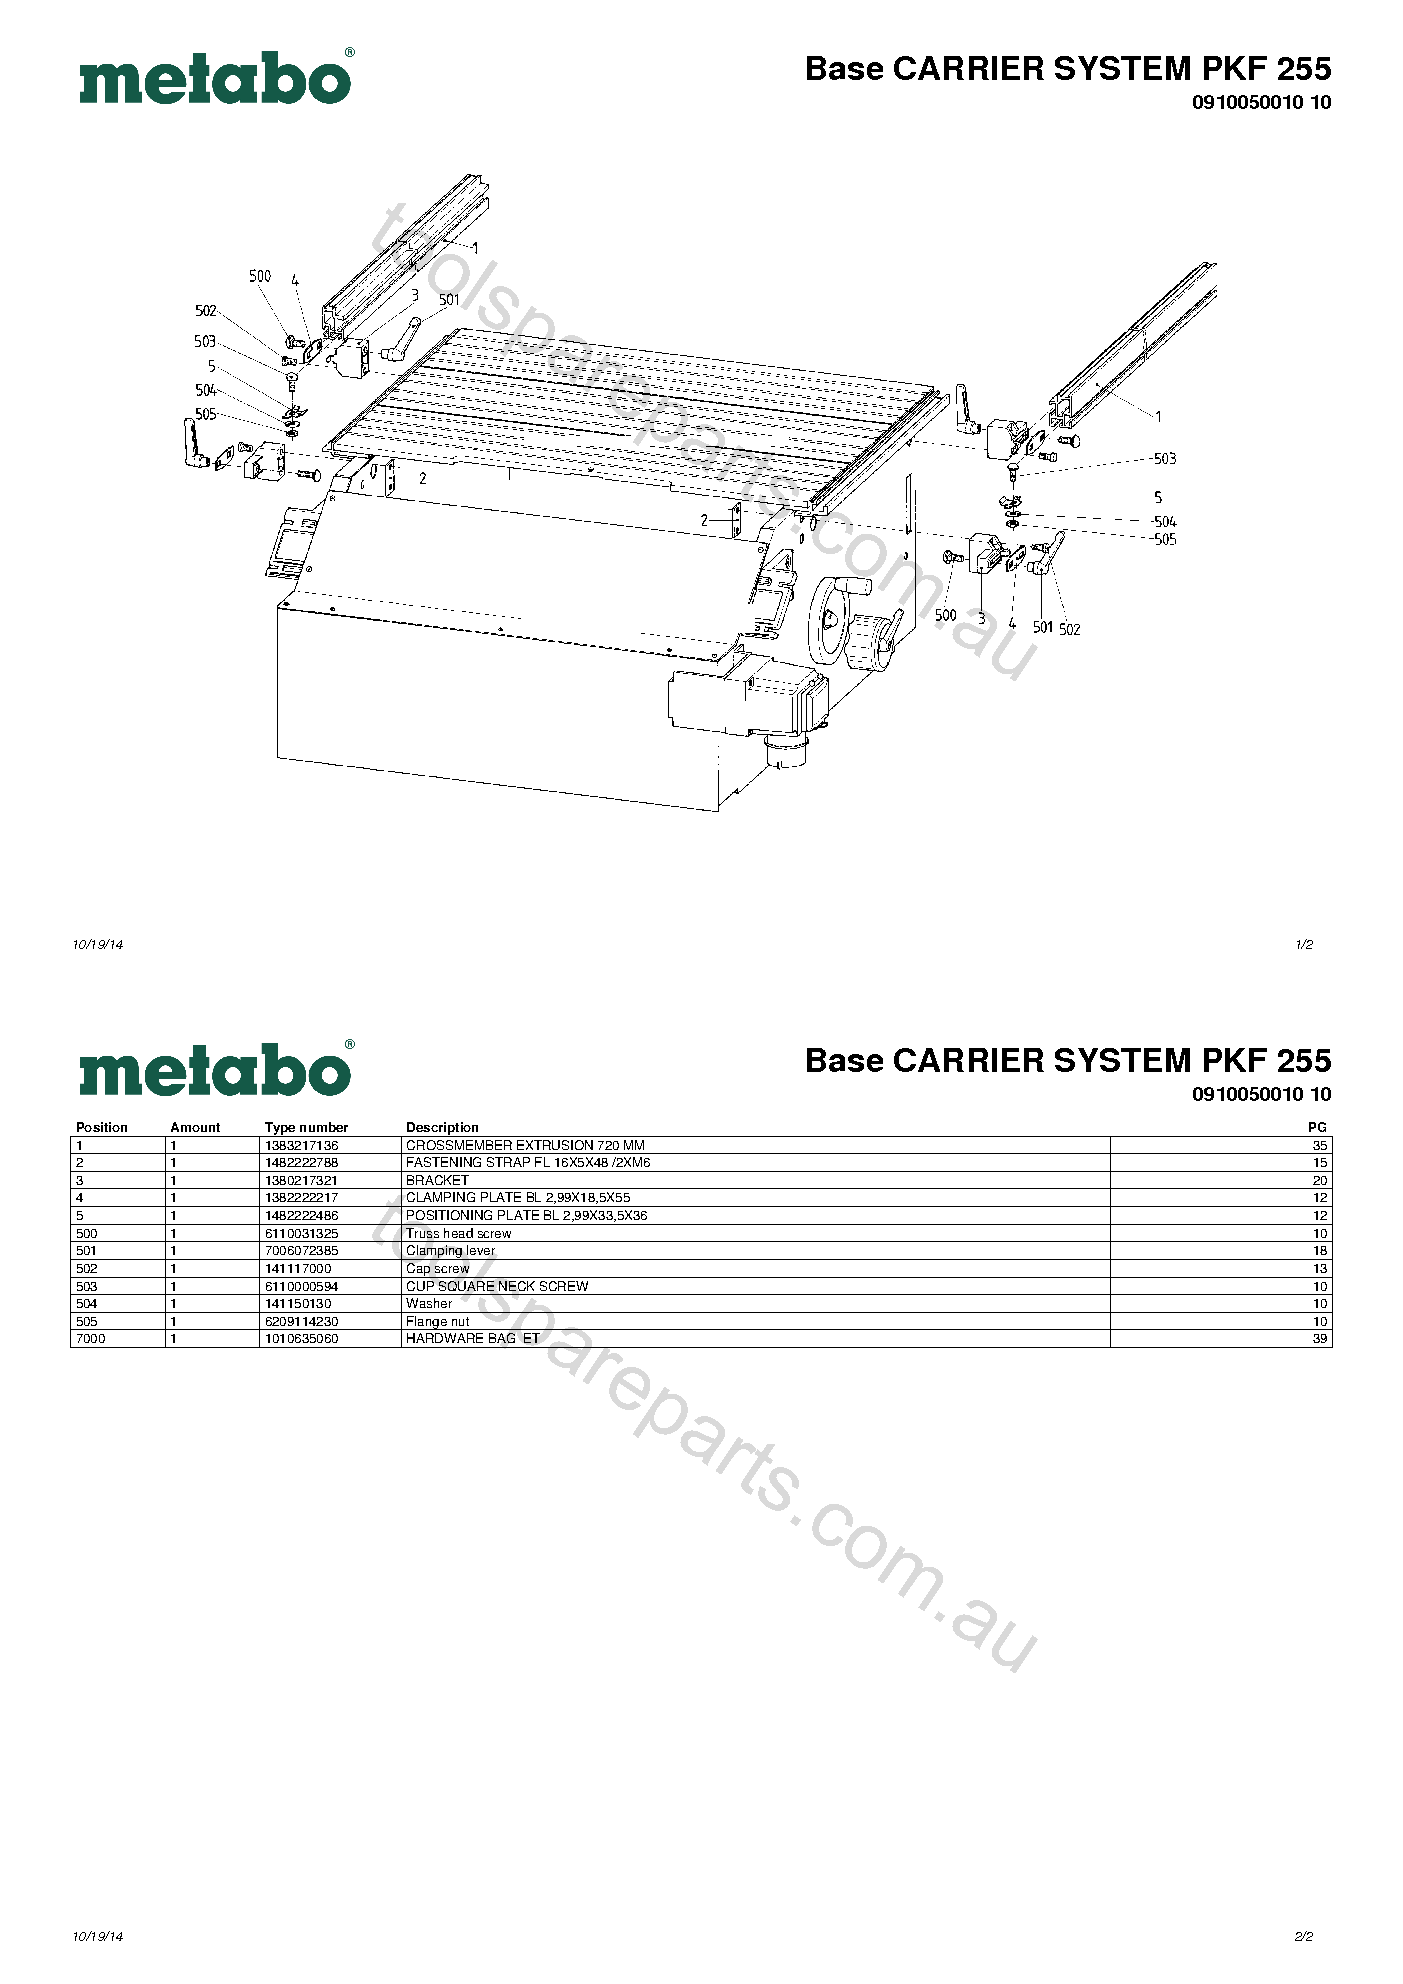 Metabo Base CARRIER SYSTEM PKF 255 0910050010 10  Diagram 1